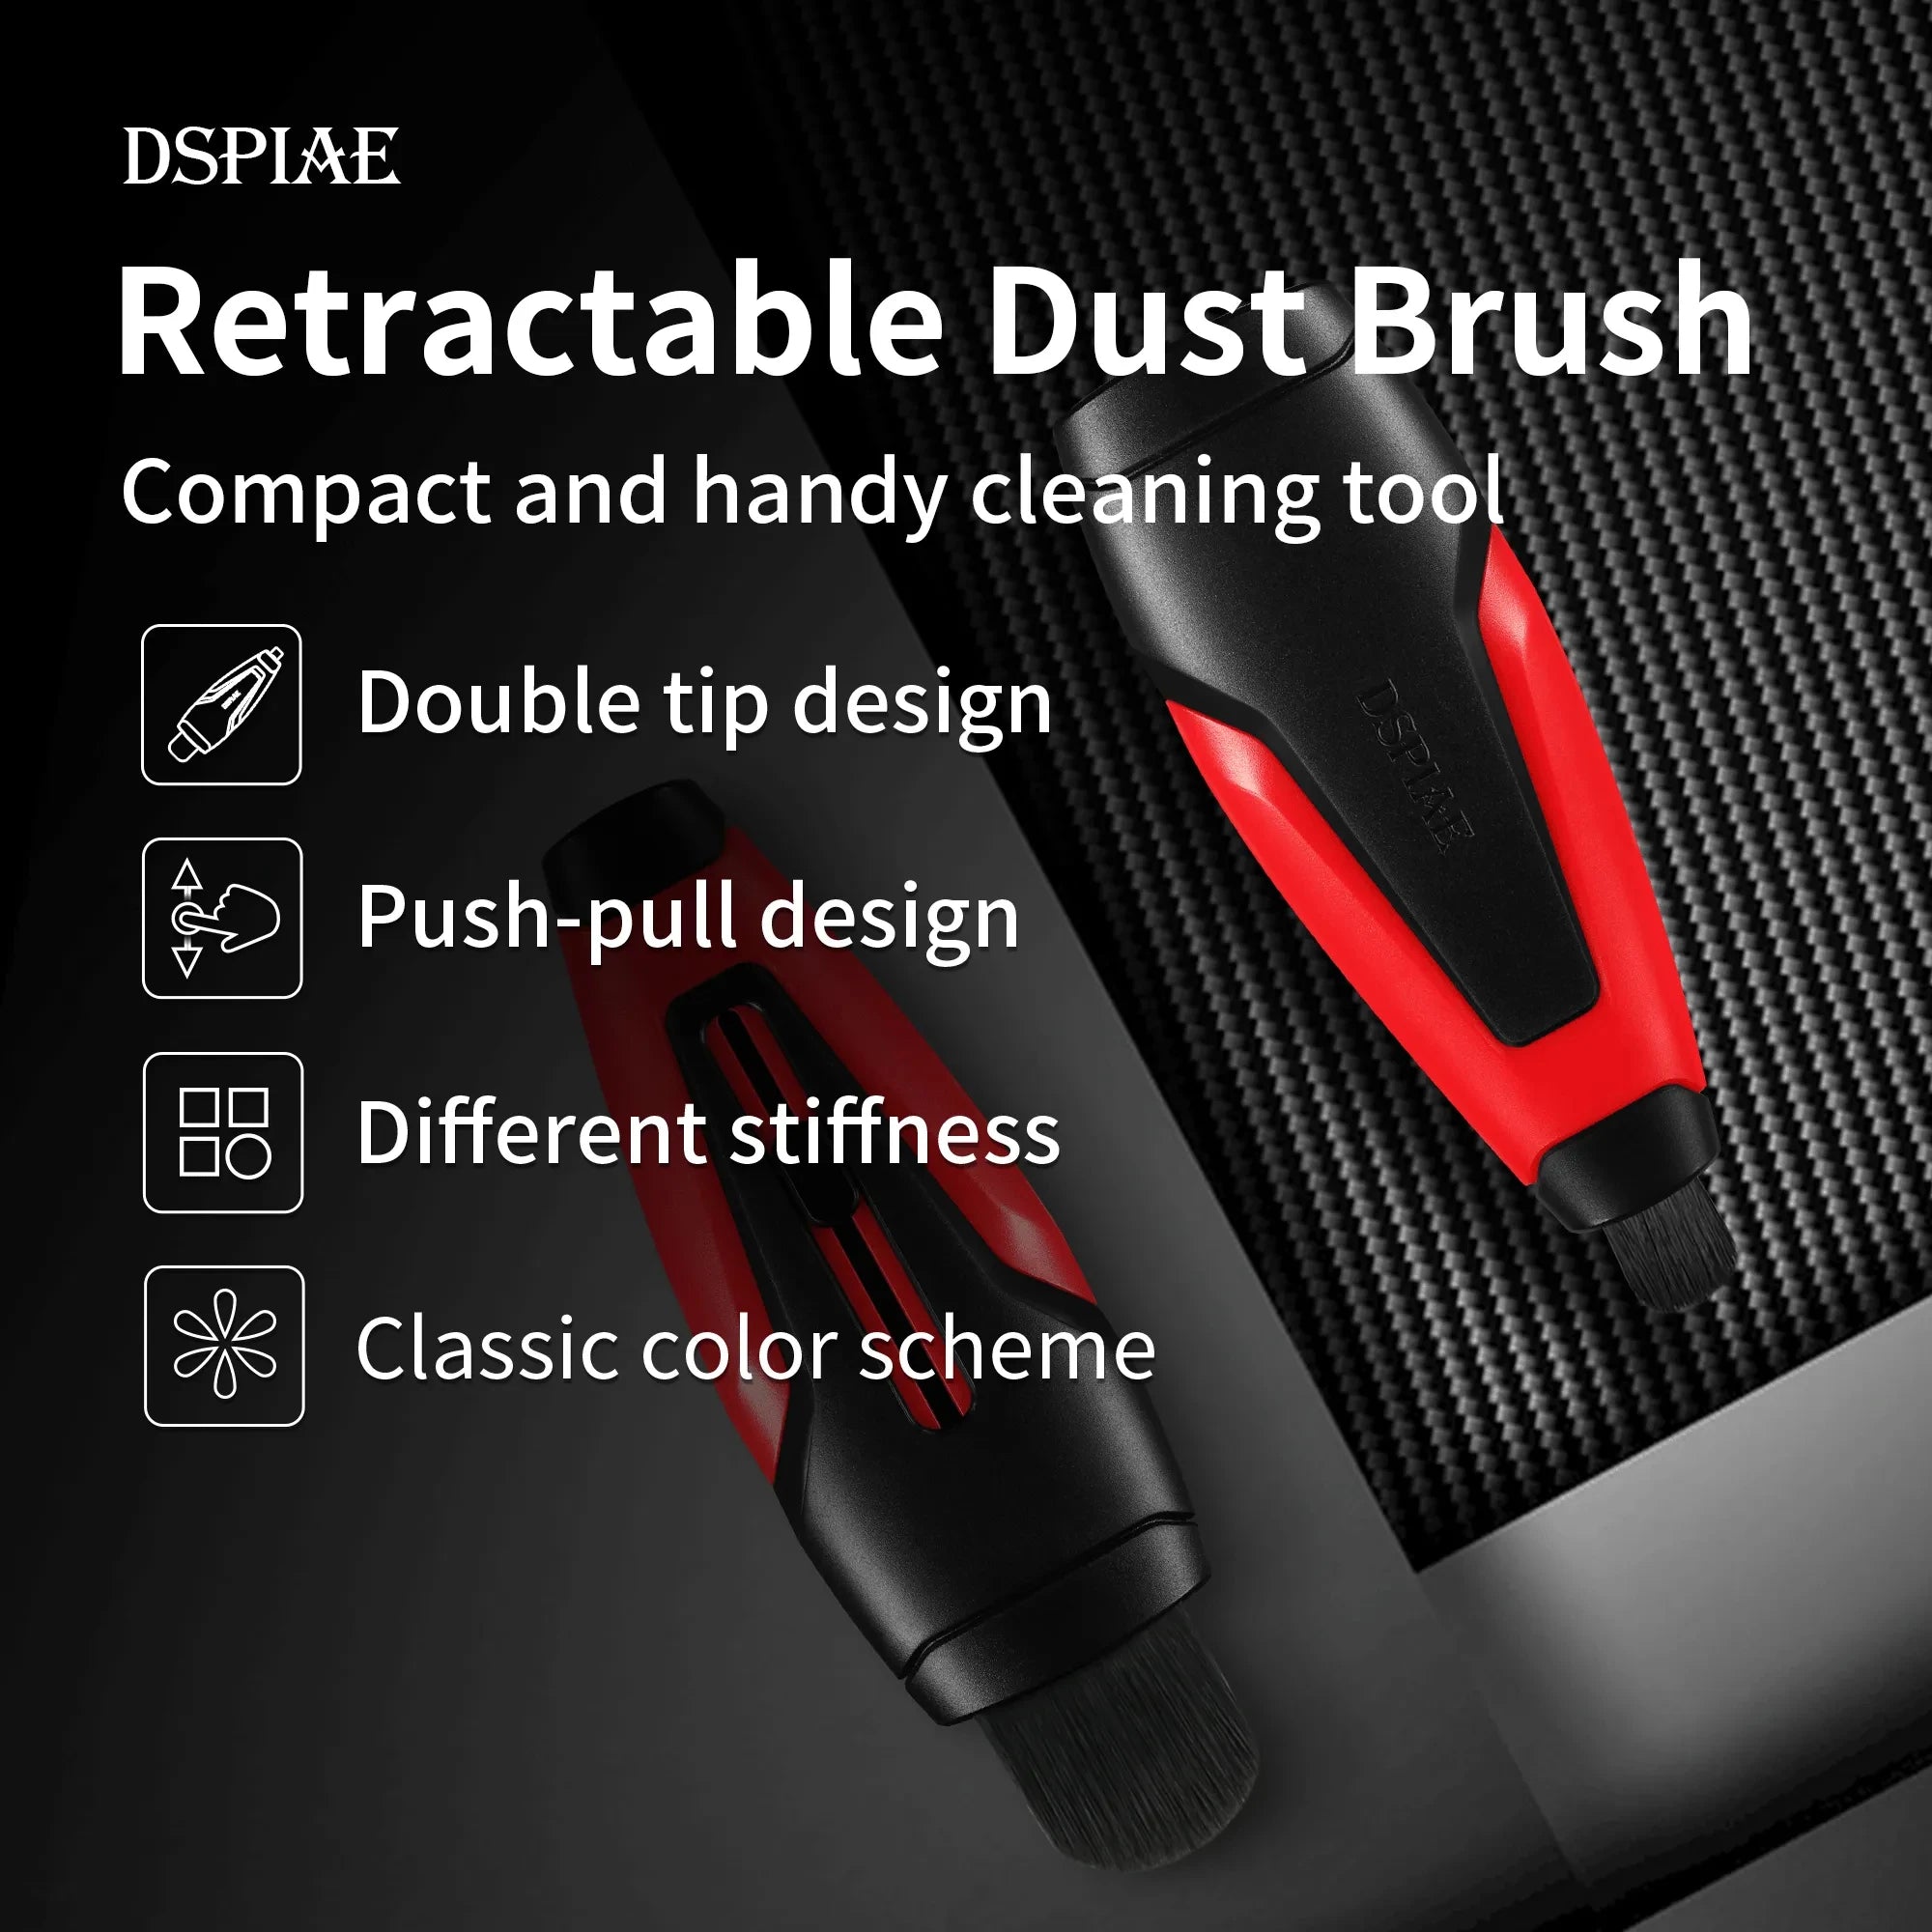 DSPIAE pt-rdb - Retractable Dust Brush Double-head